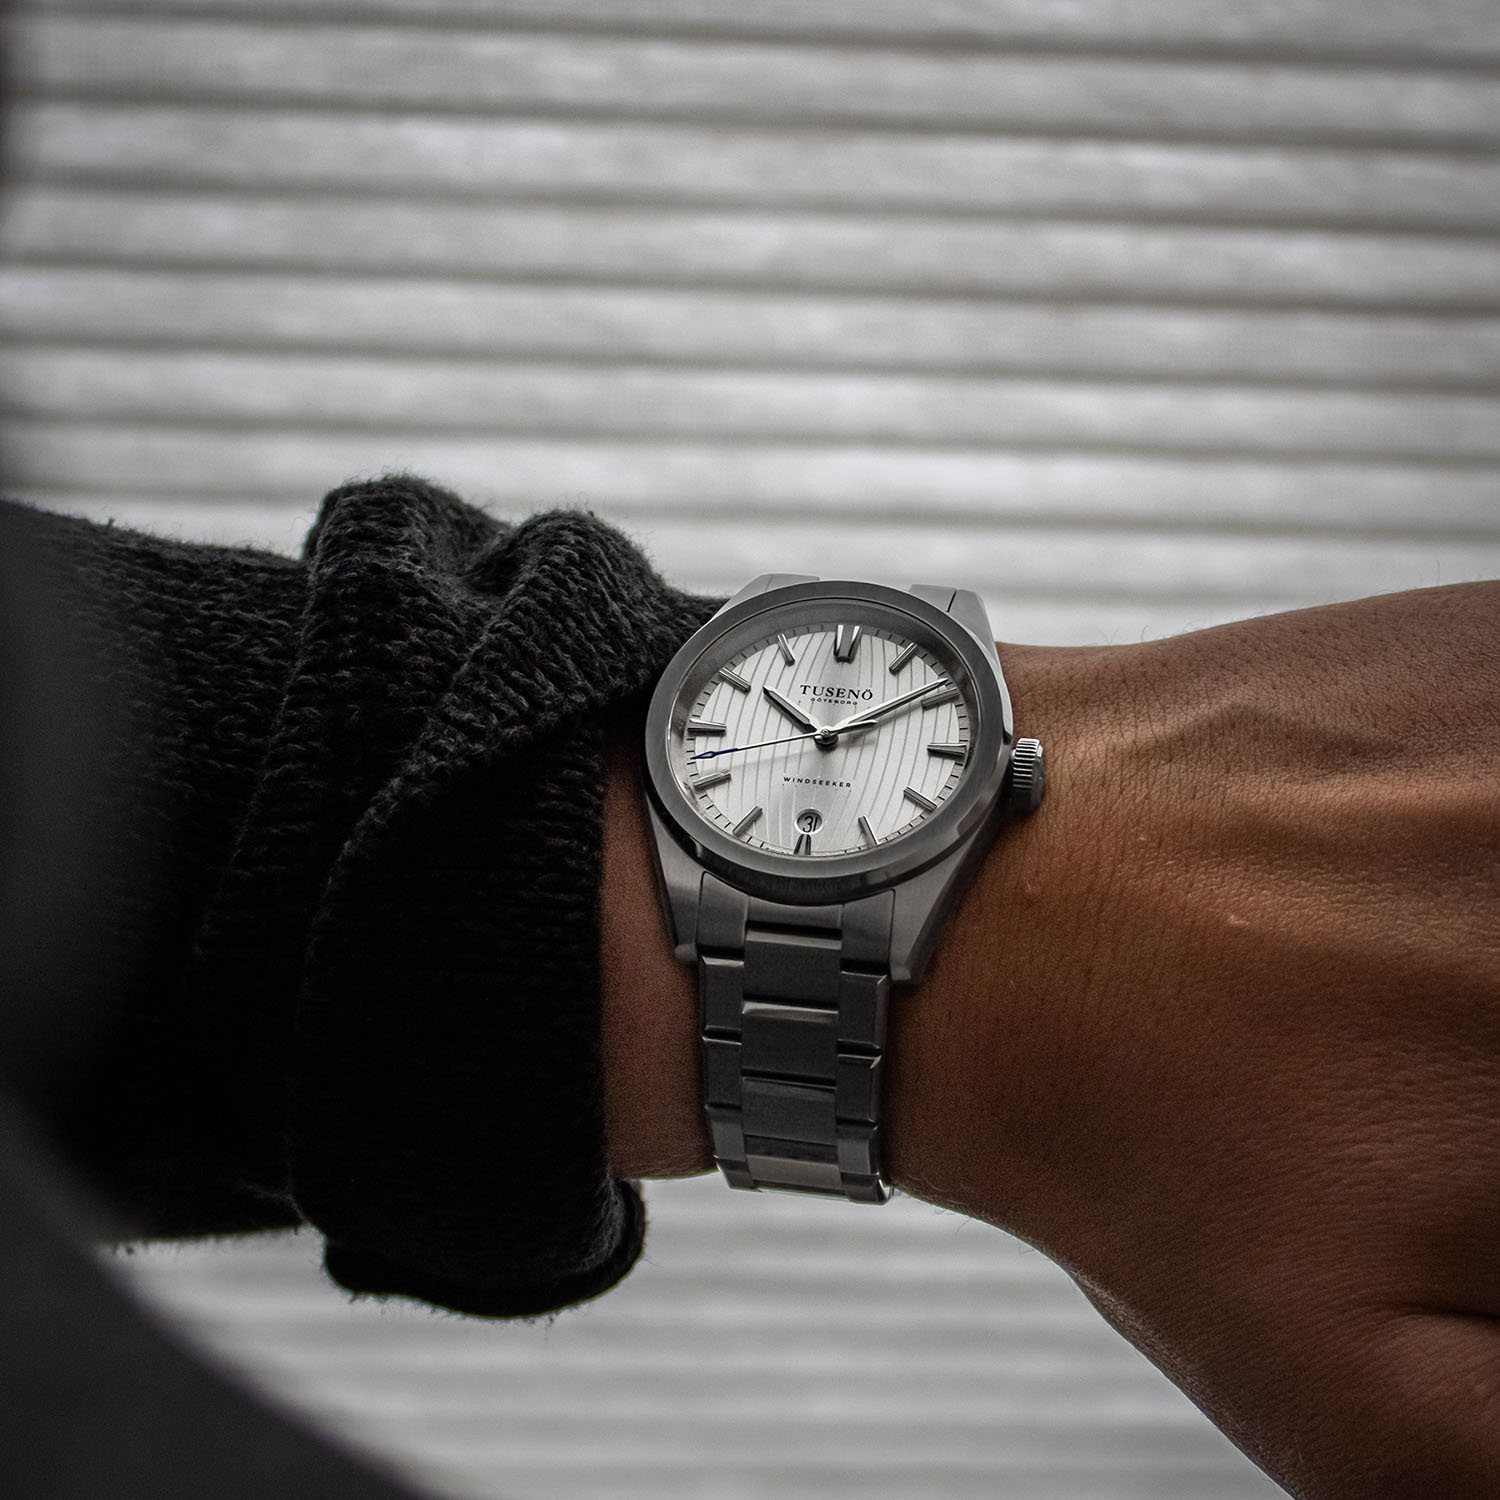 Windseeker Silver | Tusenö, Swedish automatic watches online since 2015